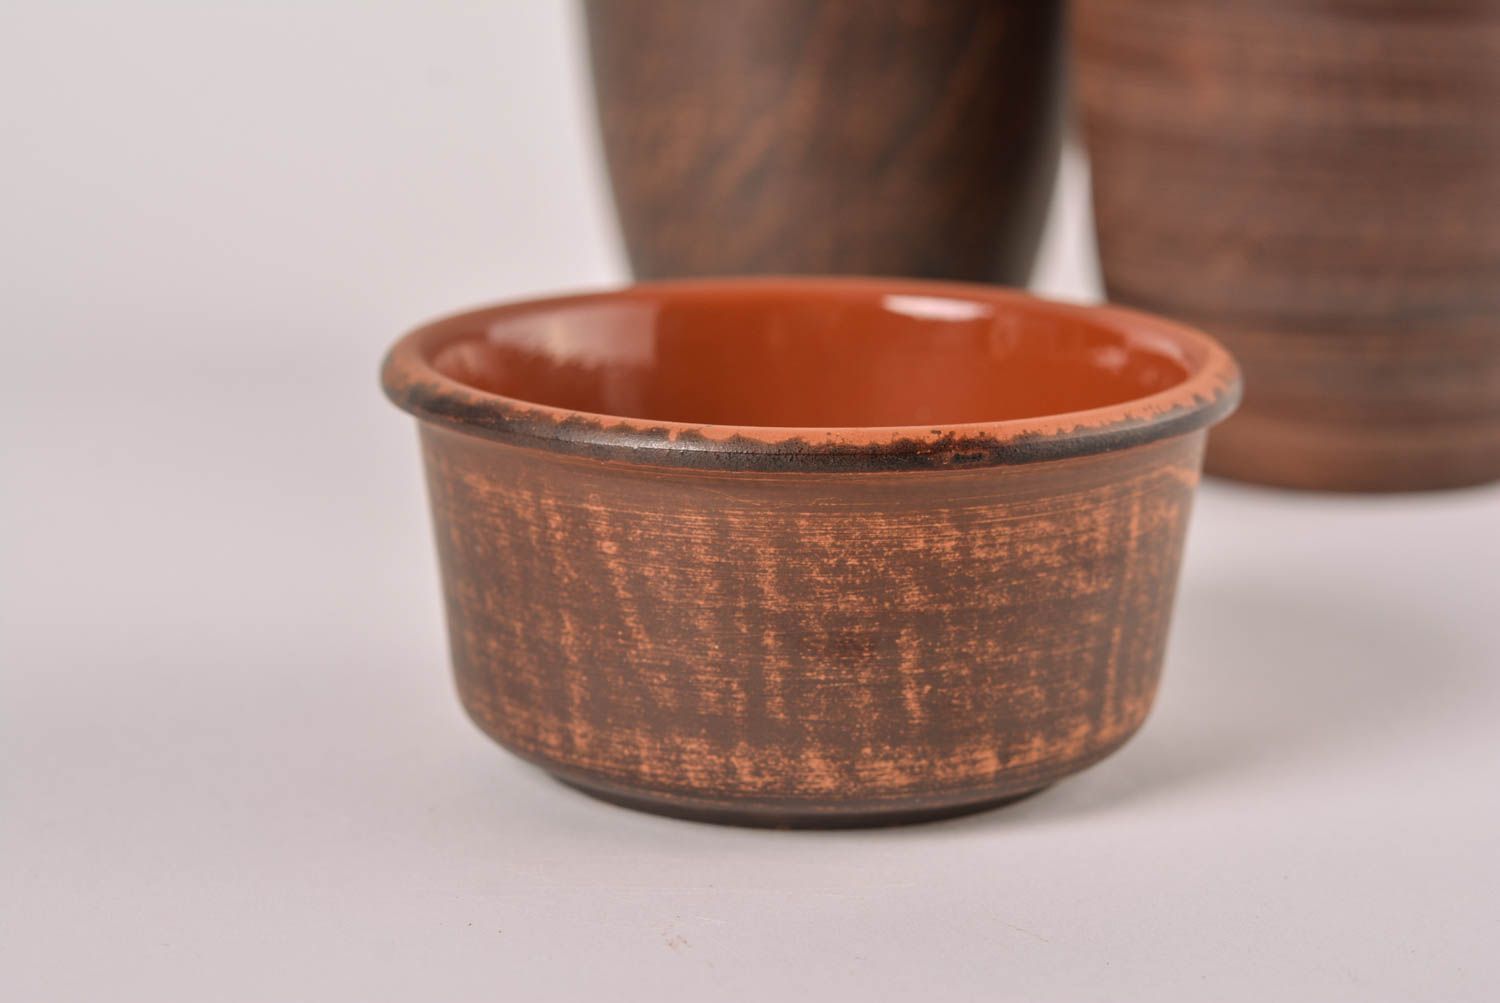 Small handmade ceramic salt shaker ceramic bowl kitchen utensils spice pot ideas photo 1